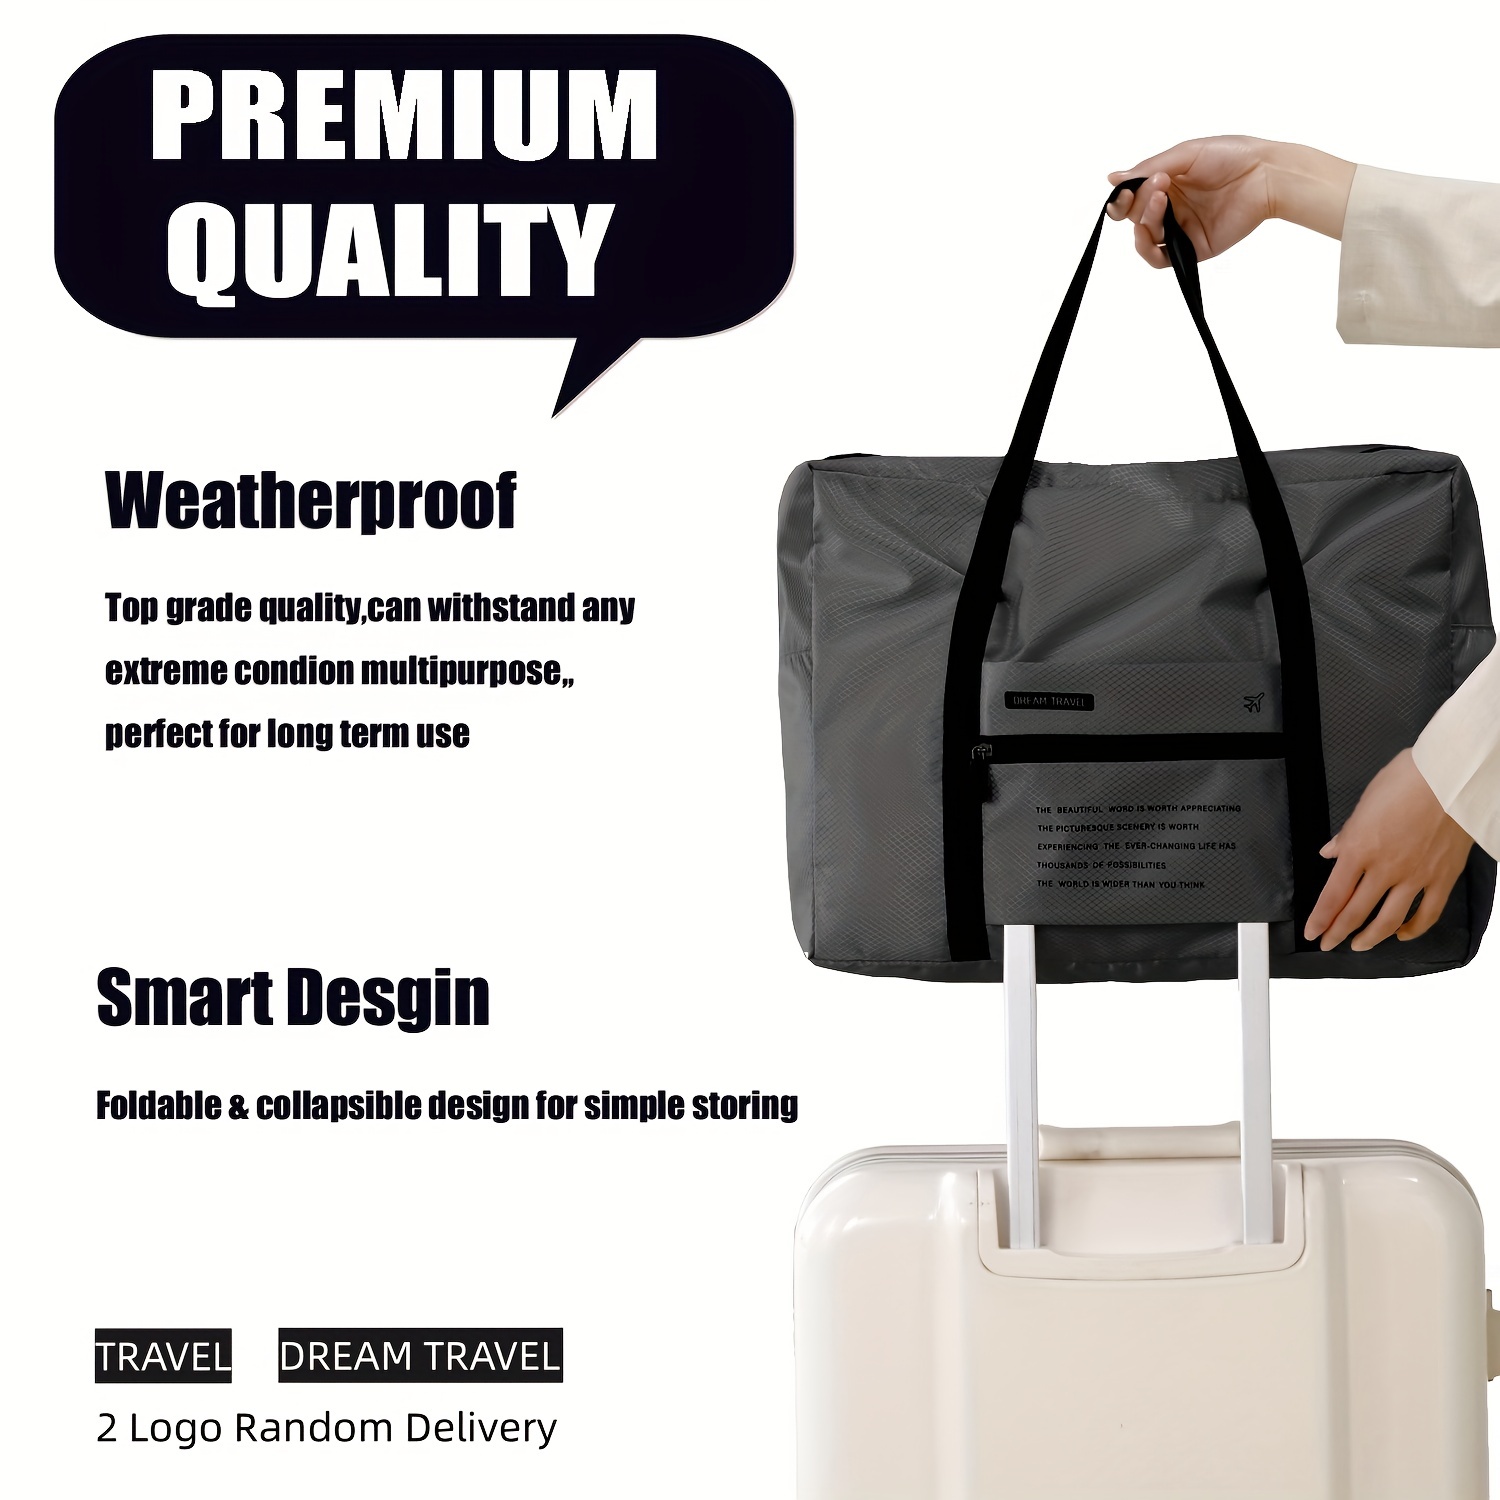 Tote Bag Large Capacity Travel  Travel Bag Waterproof Large